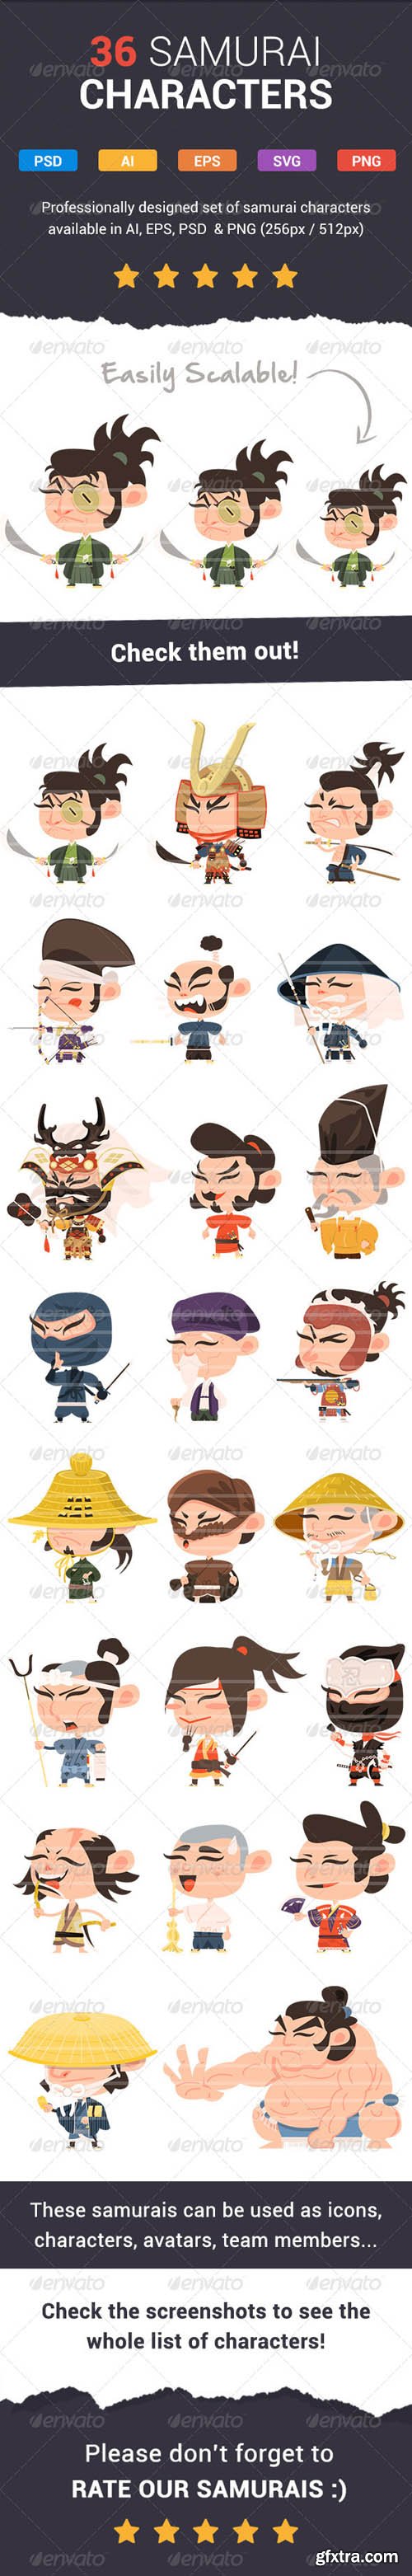 GR - 36 Fresh Samurai Characters 7271438